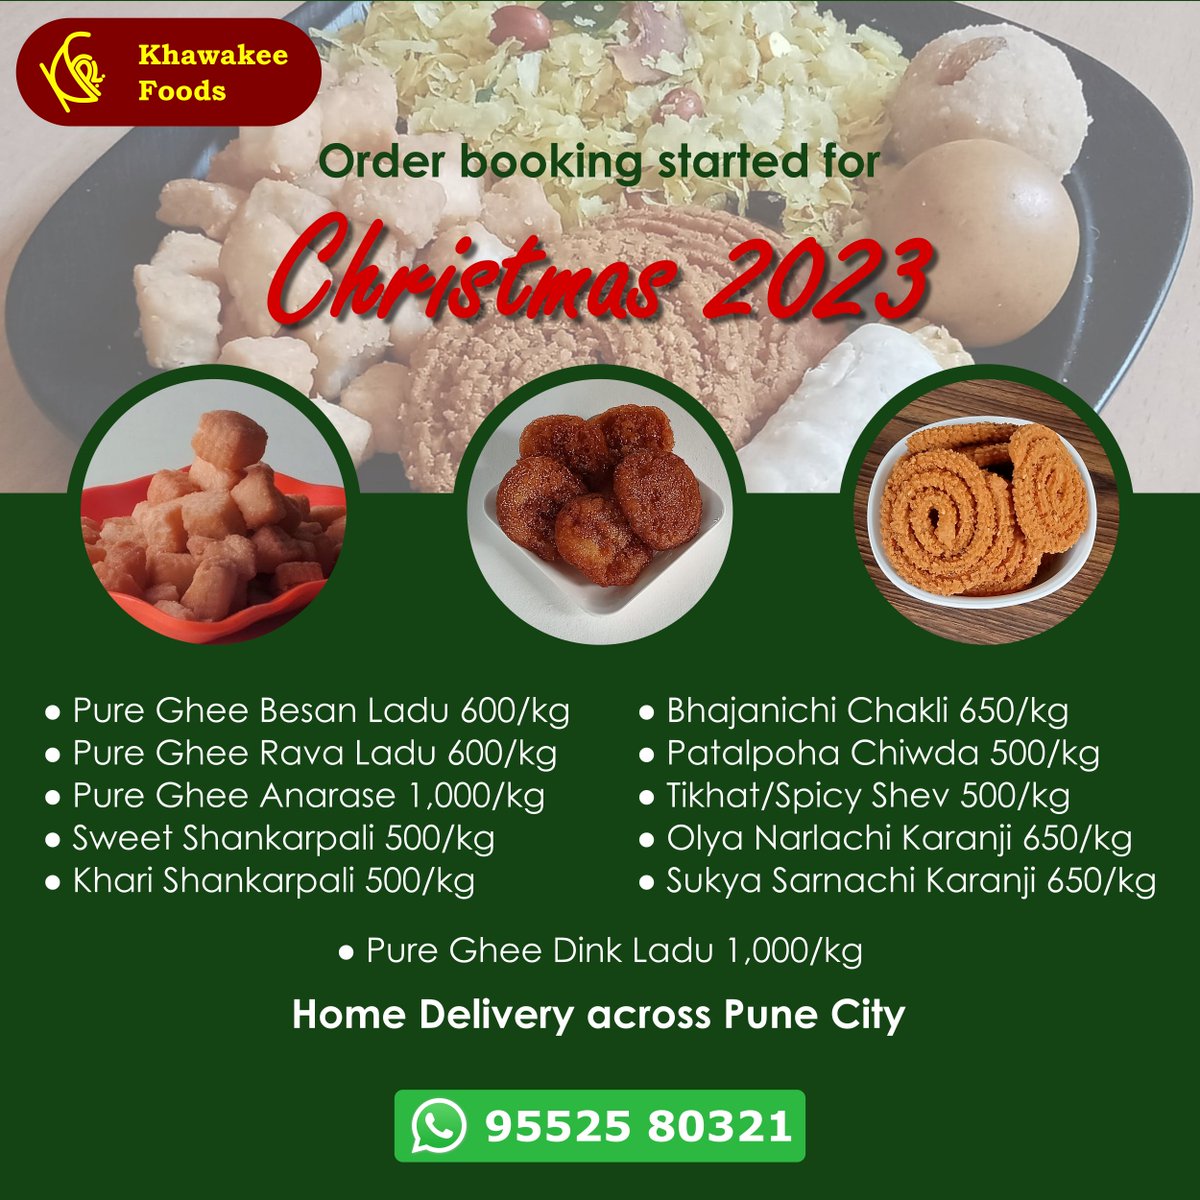 Book your Faral orders for Christmas 2023!

For order:
Call / WhatsApp on: 95525 80321

#Christmas #faral #khawakee #loveofeating #food #maharashtrianfood #traditional #festivevibes #Festival #ordernow #maharashtra #pune